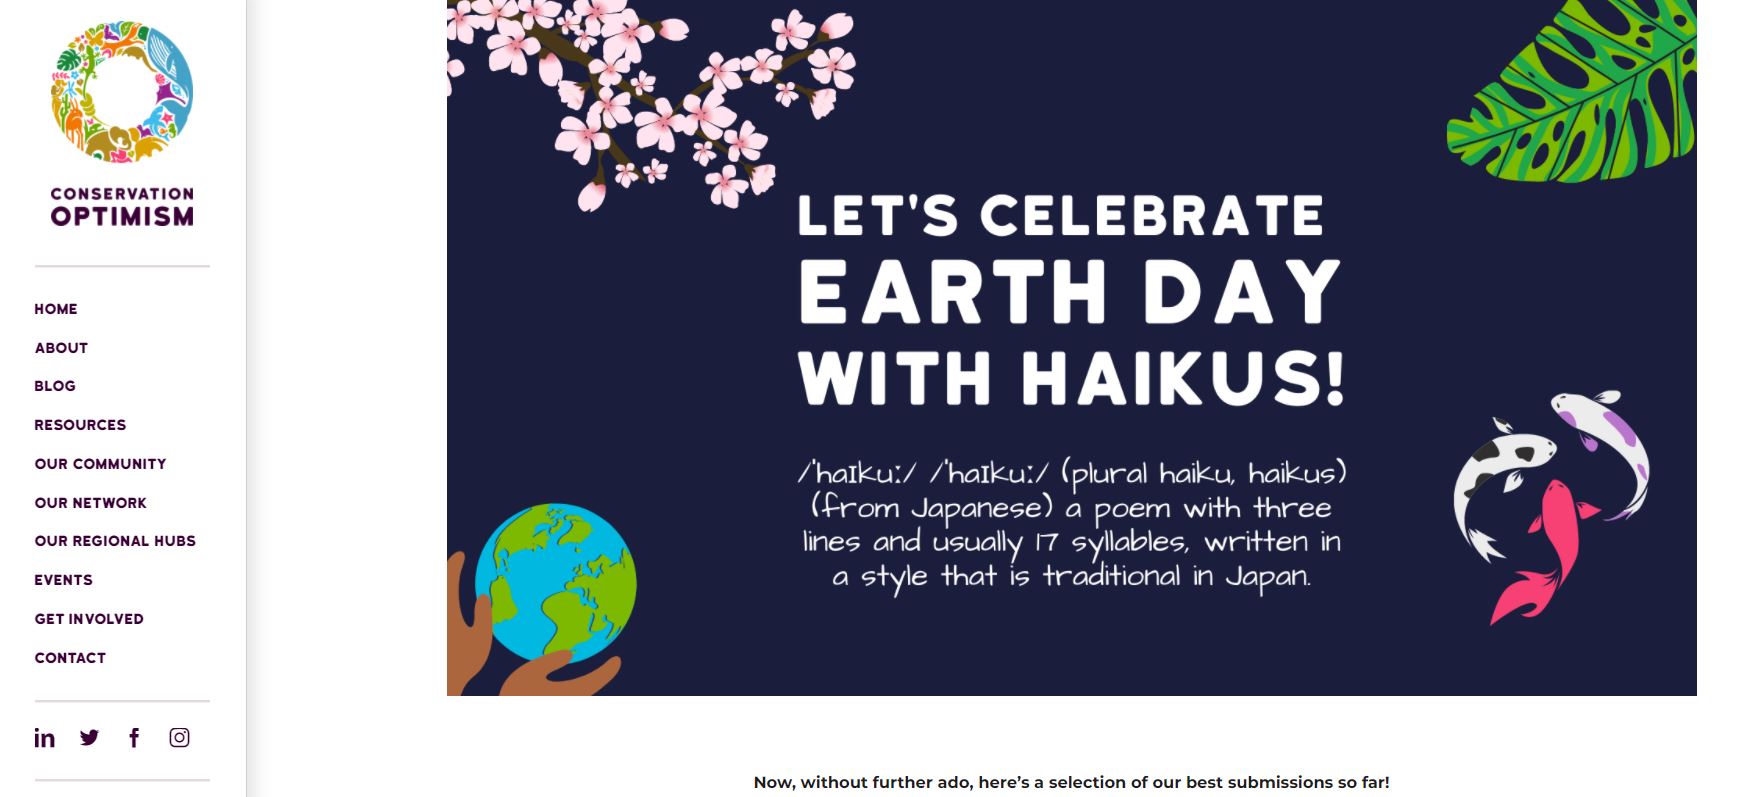 Haiku Earth Day Conservation optimism